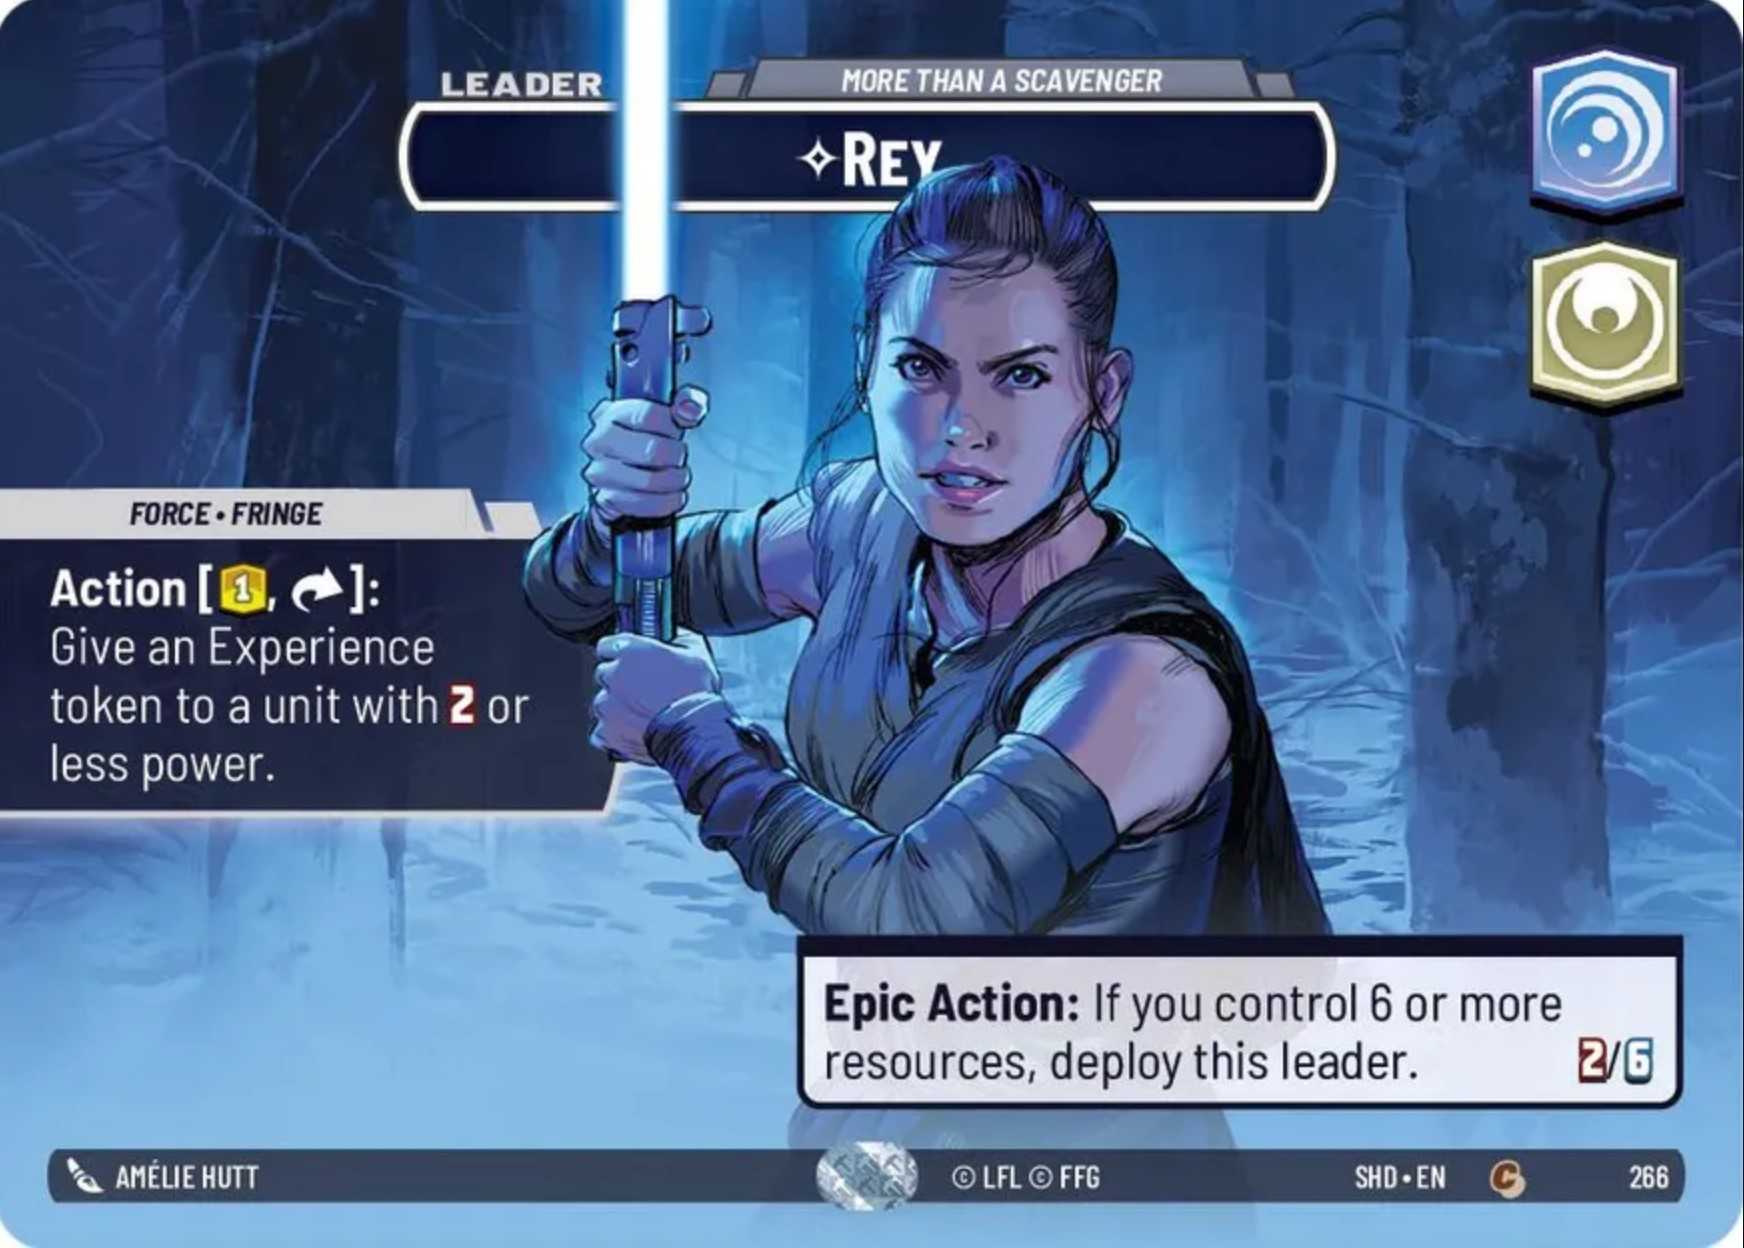 Rey Showcase card in Star Wars Unlimited